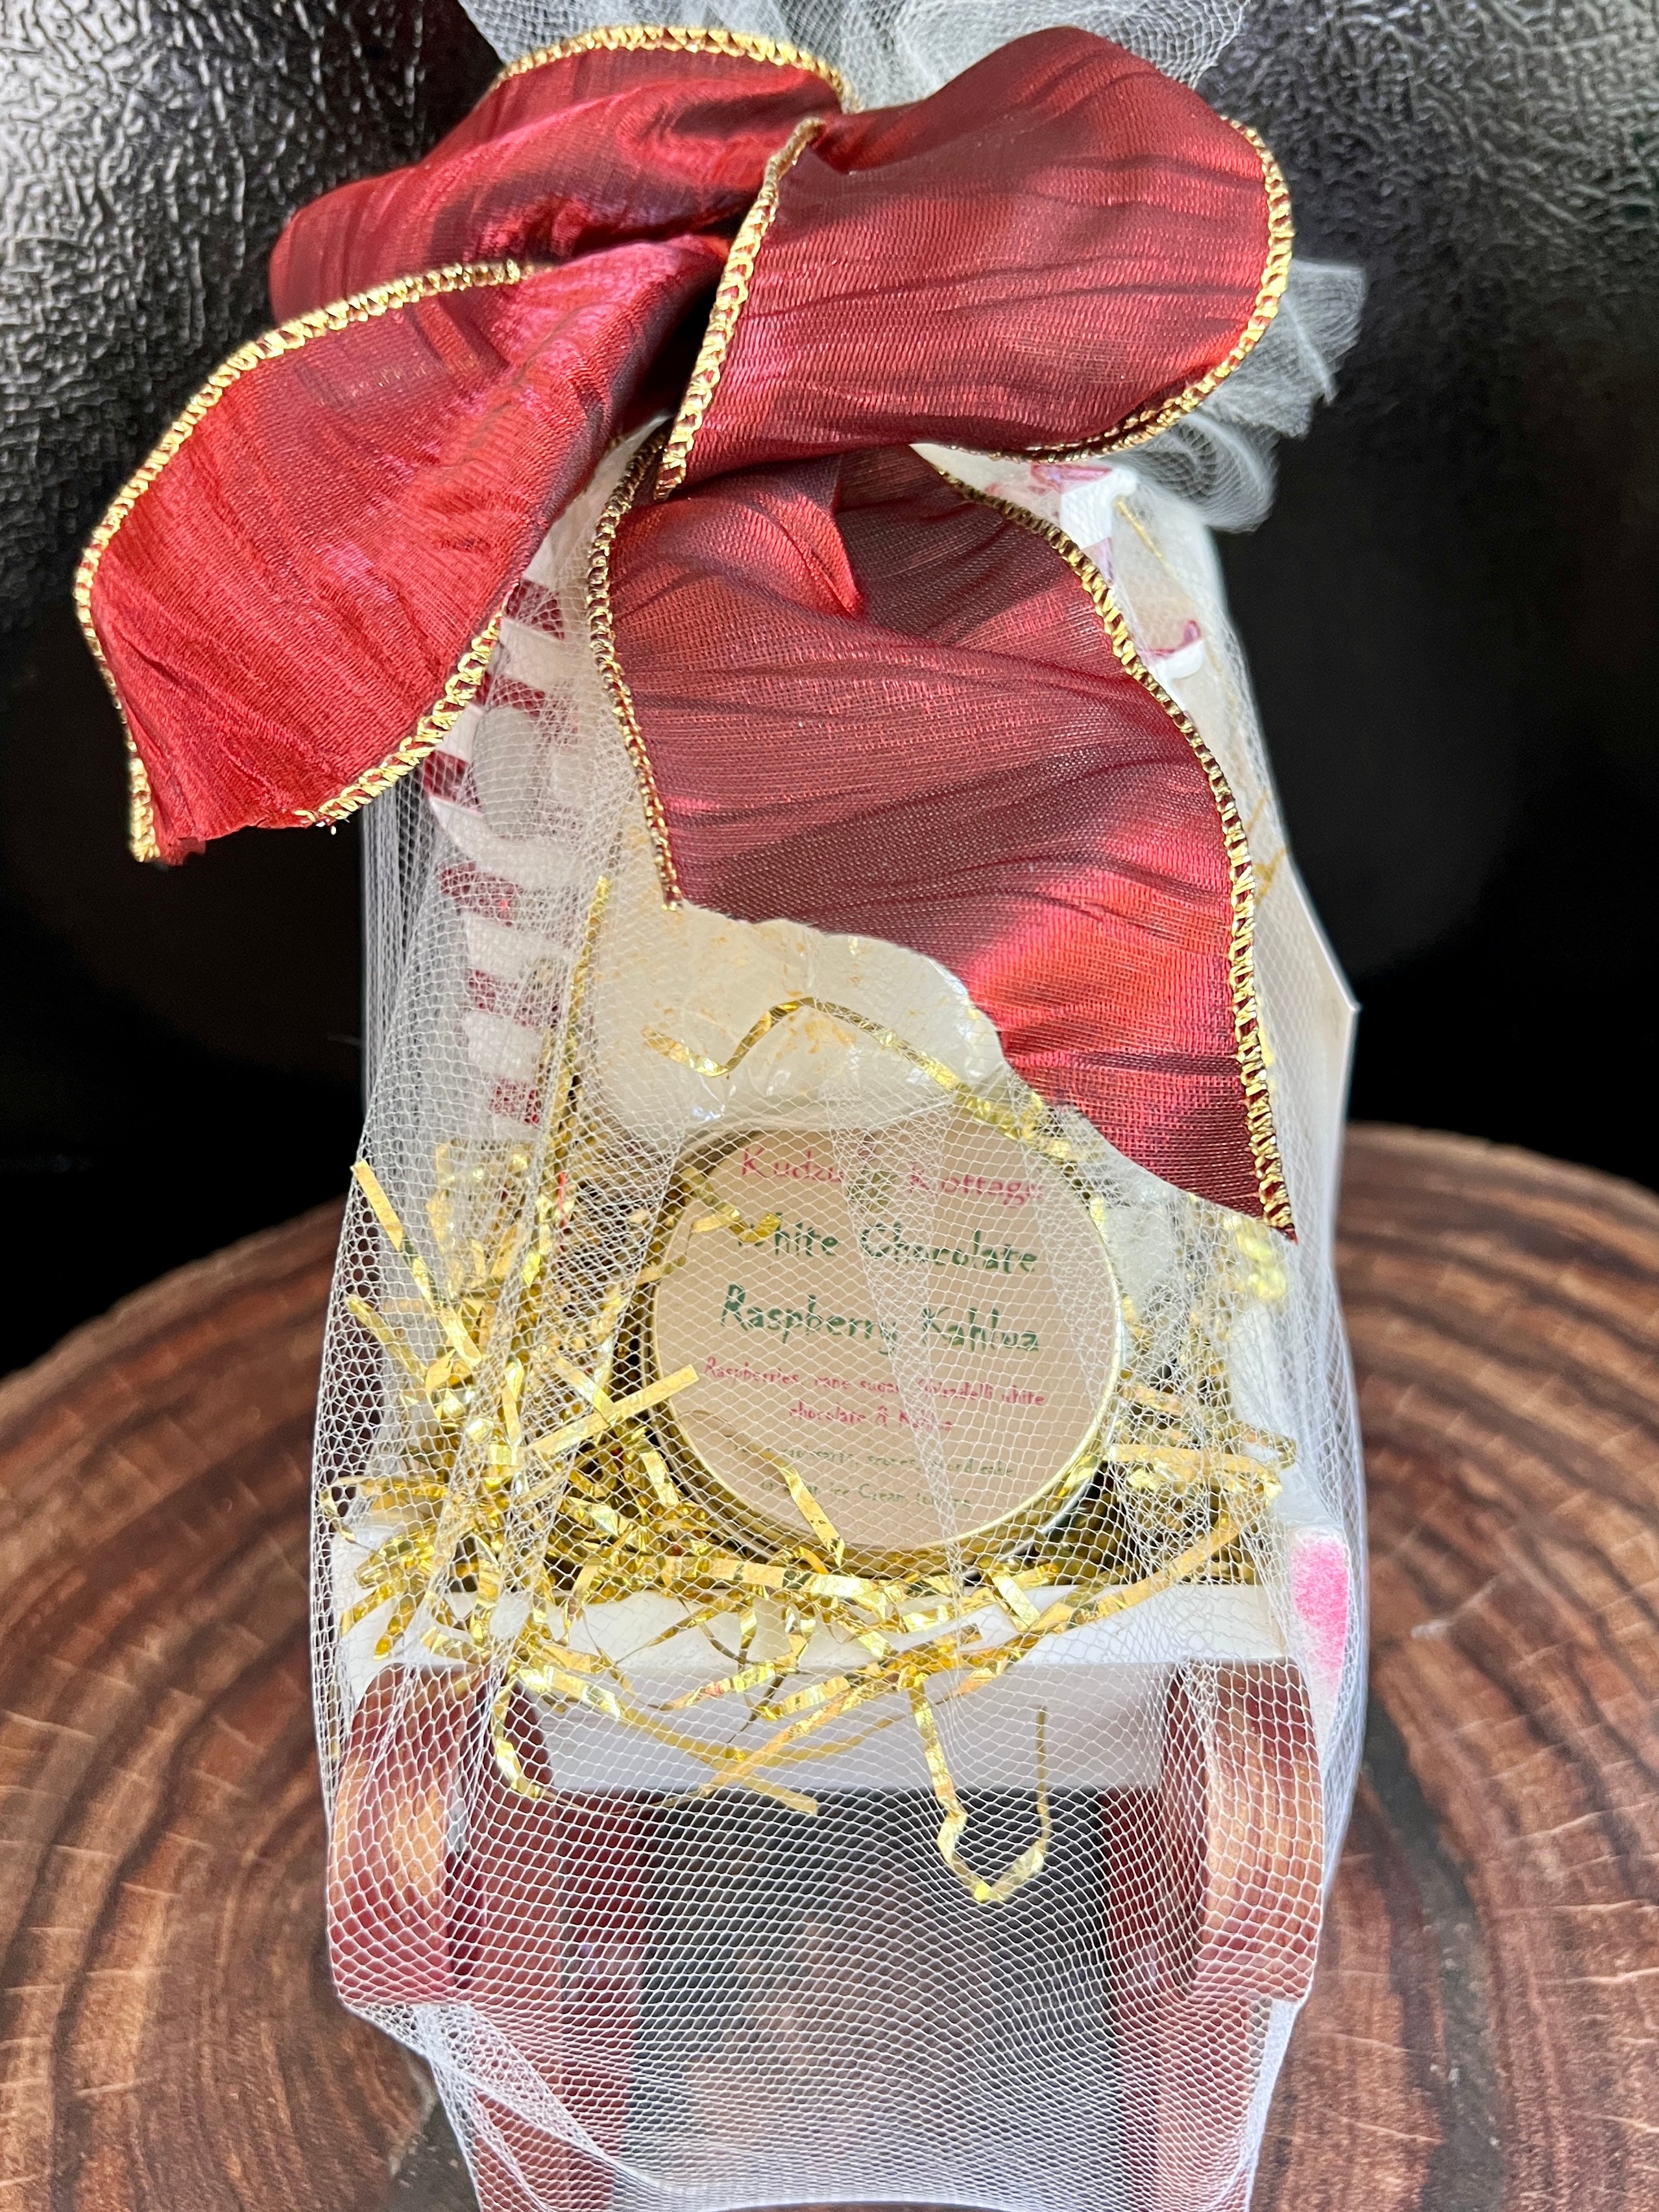 Holiday White Chocolate Sleigh Gift Basket